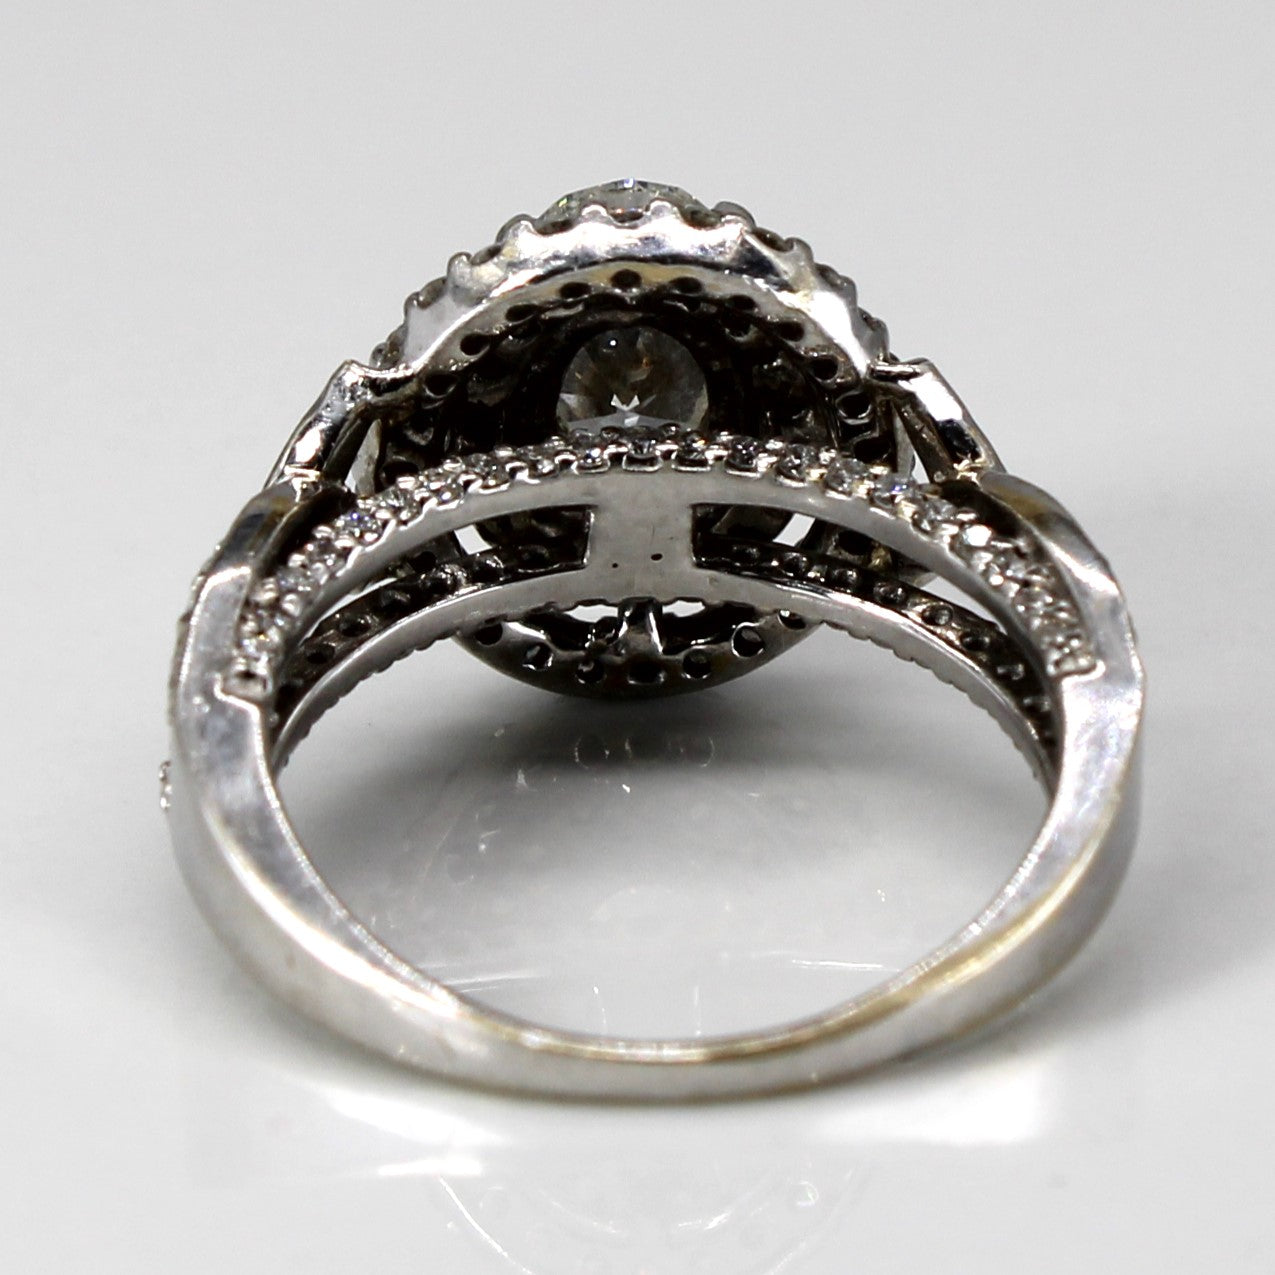 Halo Diamond Engagement Ring | 1.73ctw | SZ 4.75 |